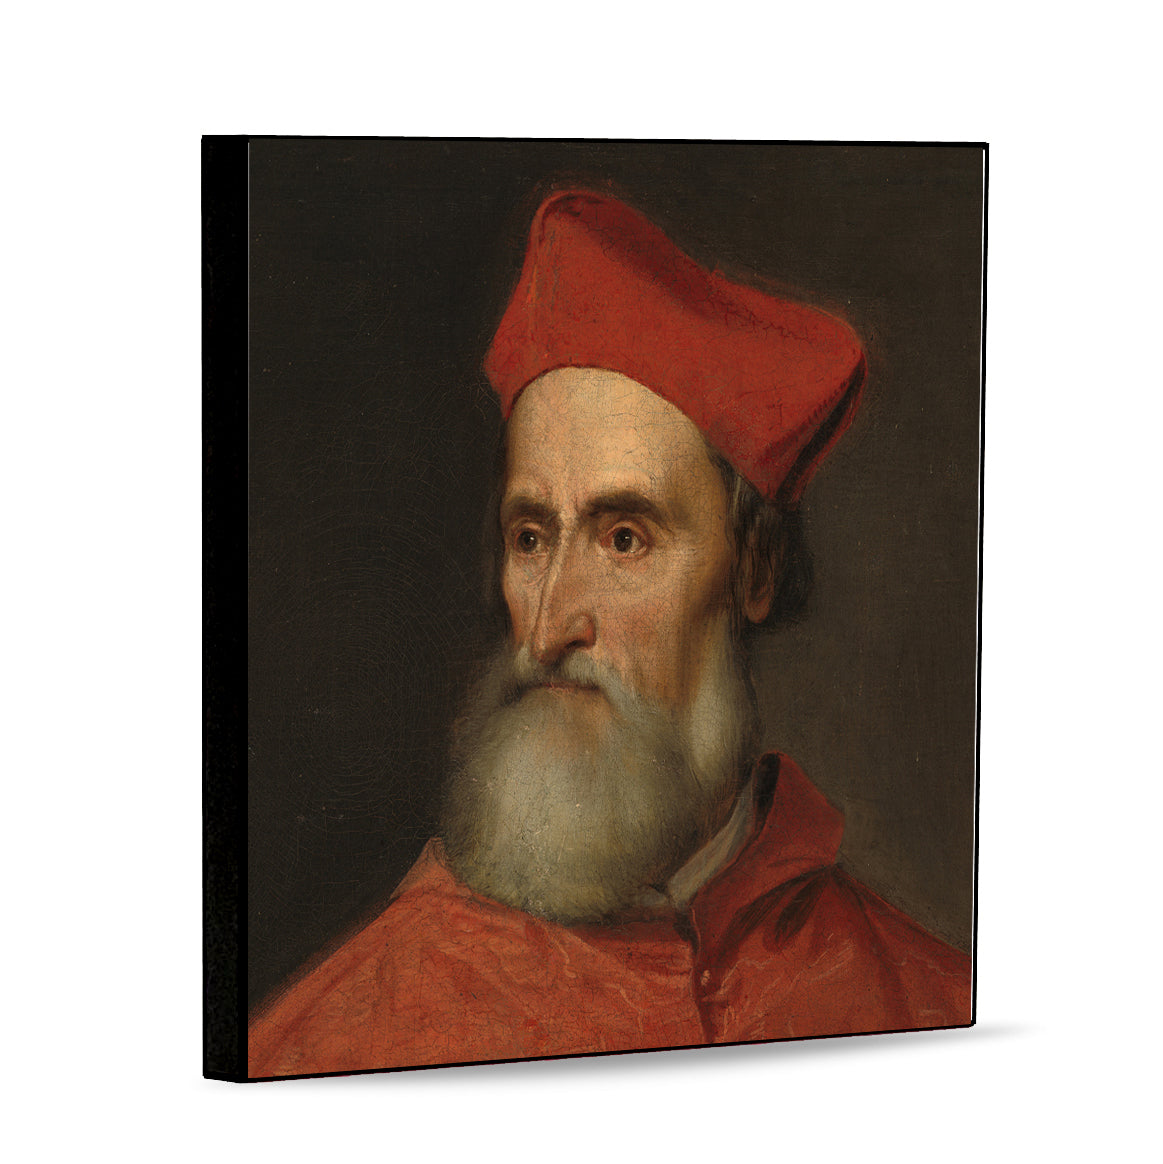 AFFRESCO: Panel Tile - Opera title "Cardinal PIETRO BEMBO" portrait by Tiziano